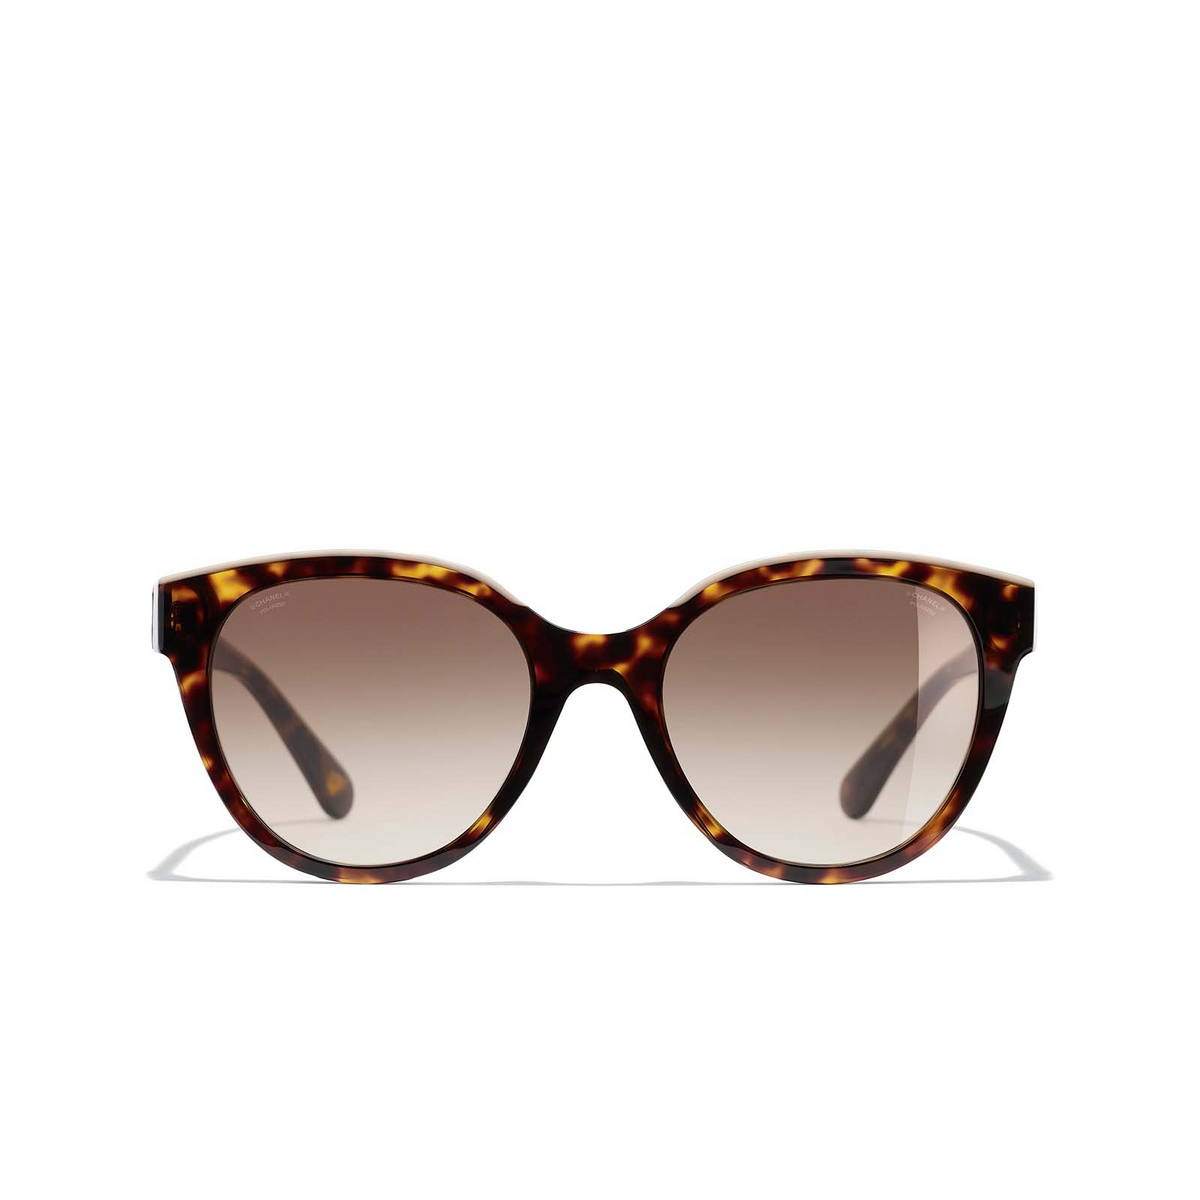 CHANEL butterfly Sunglasses 1682S9 Dark Tortoise & Beige - front view